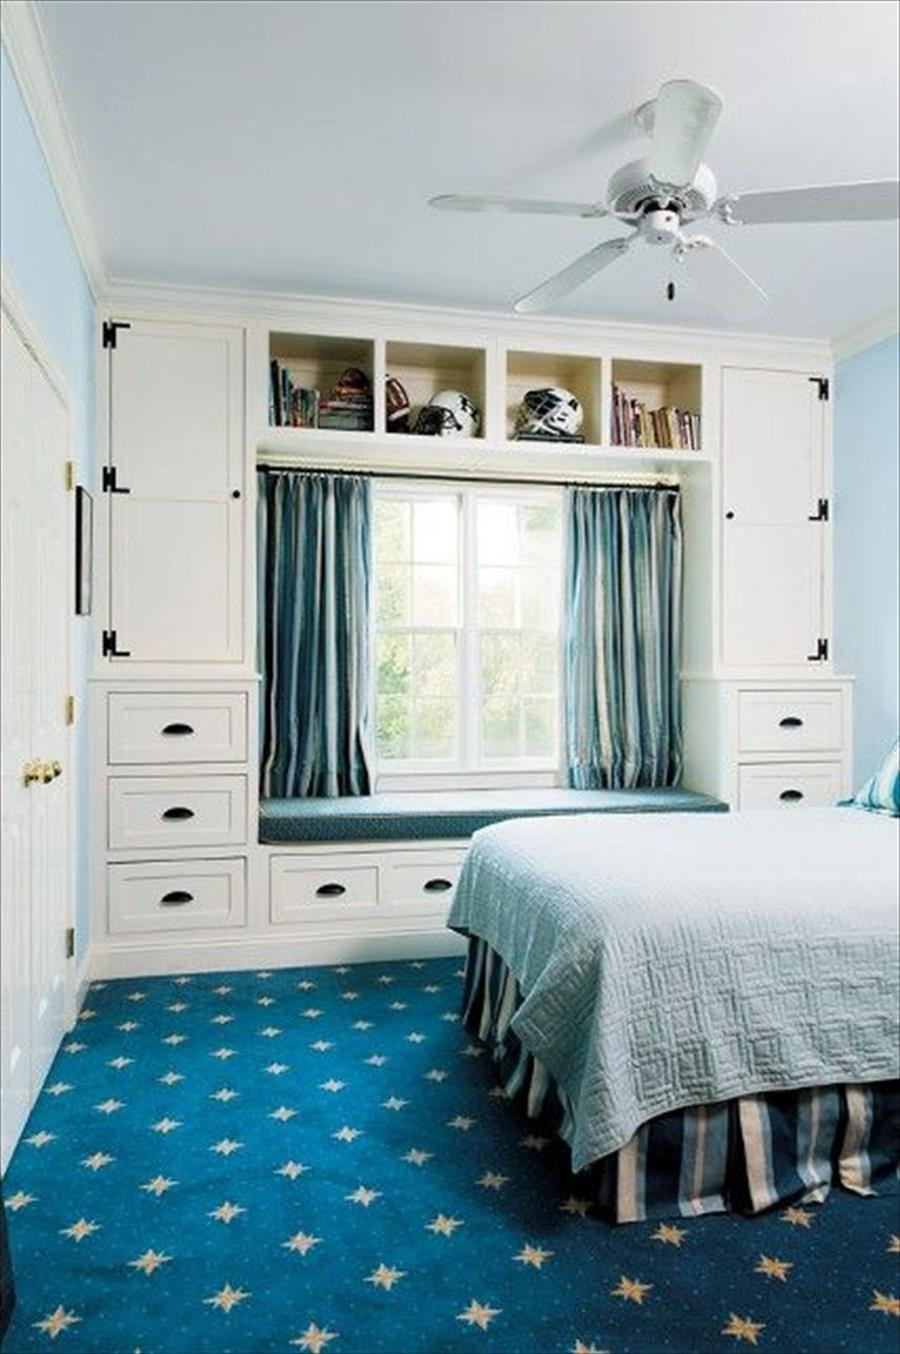 Built In Bedroom Storage Best Of 31 Simple but Smart Bedroom Storage Ideas